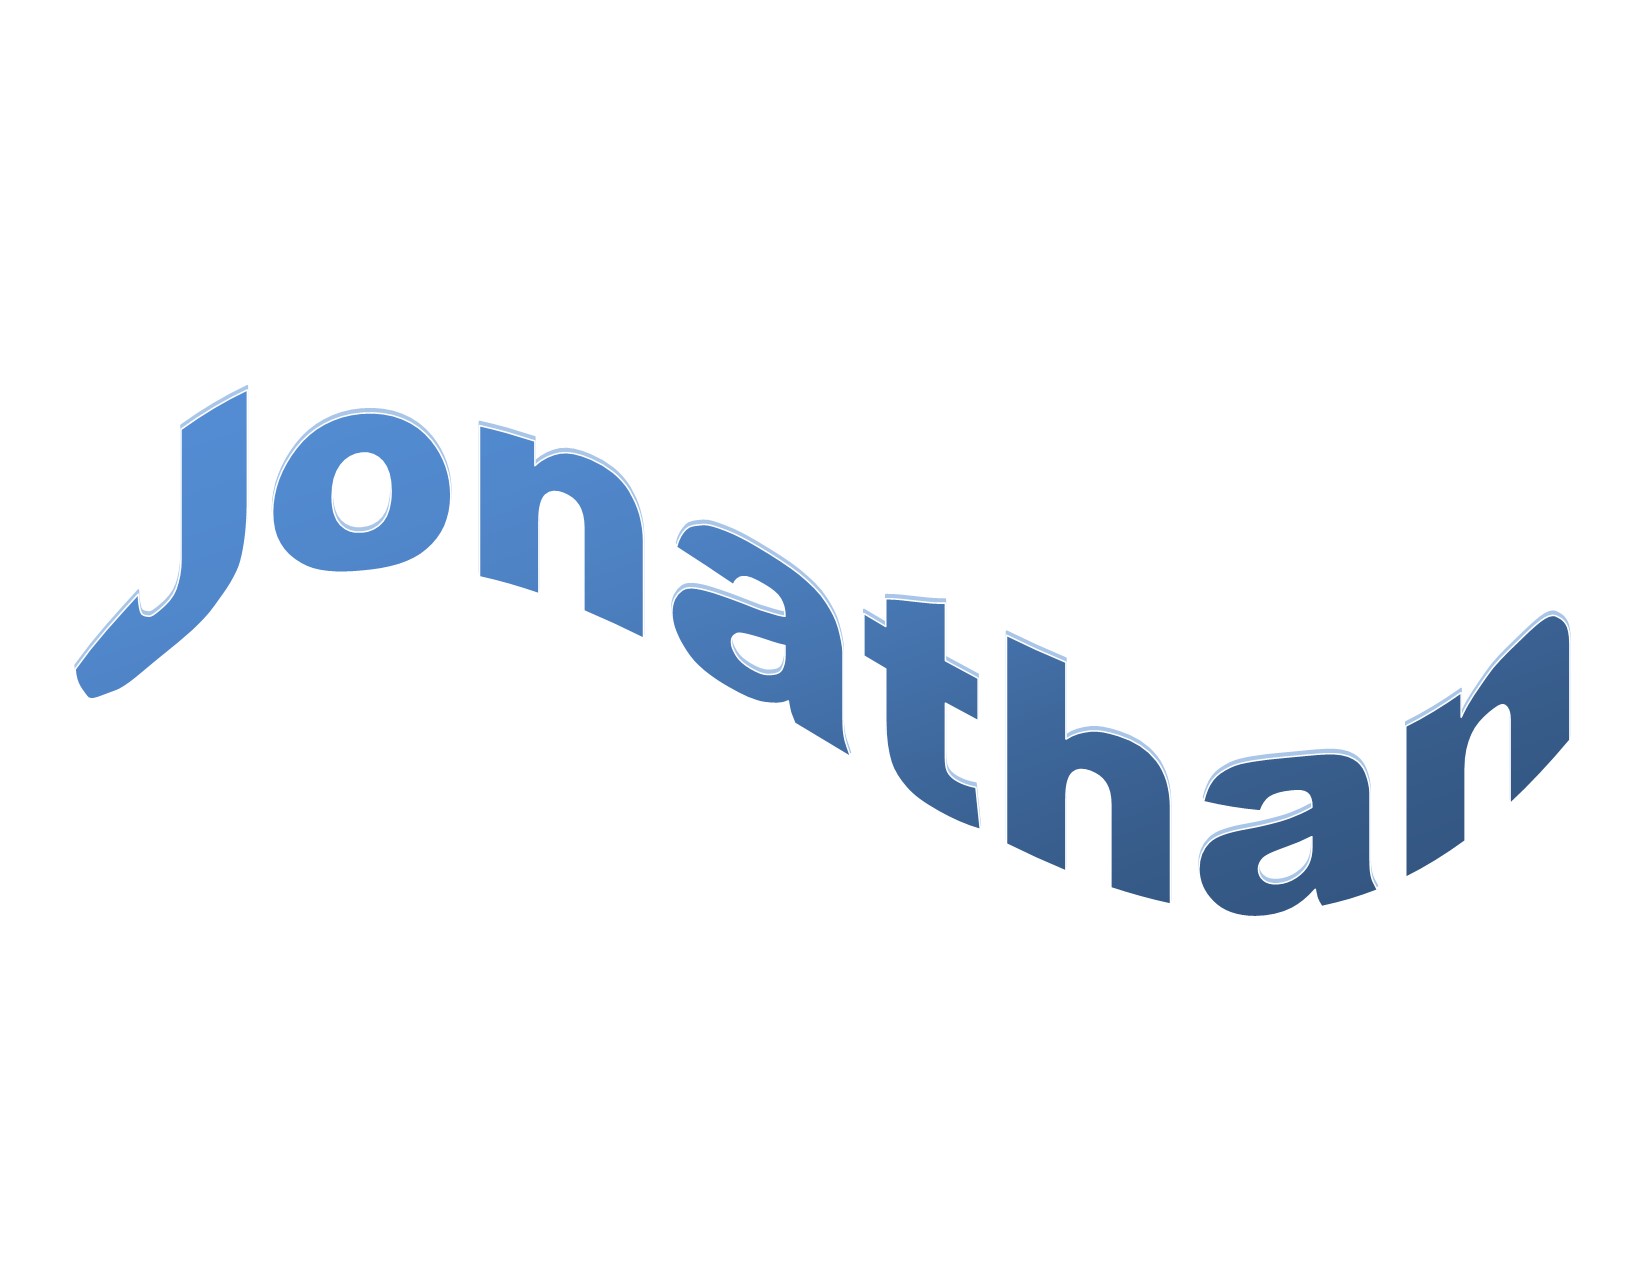 Jonathan’s songs